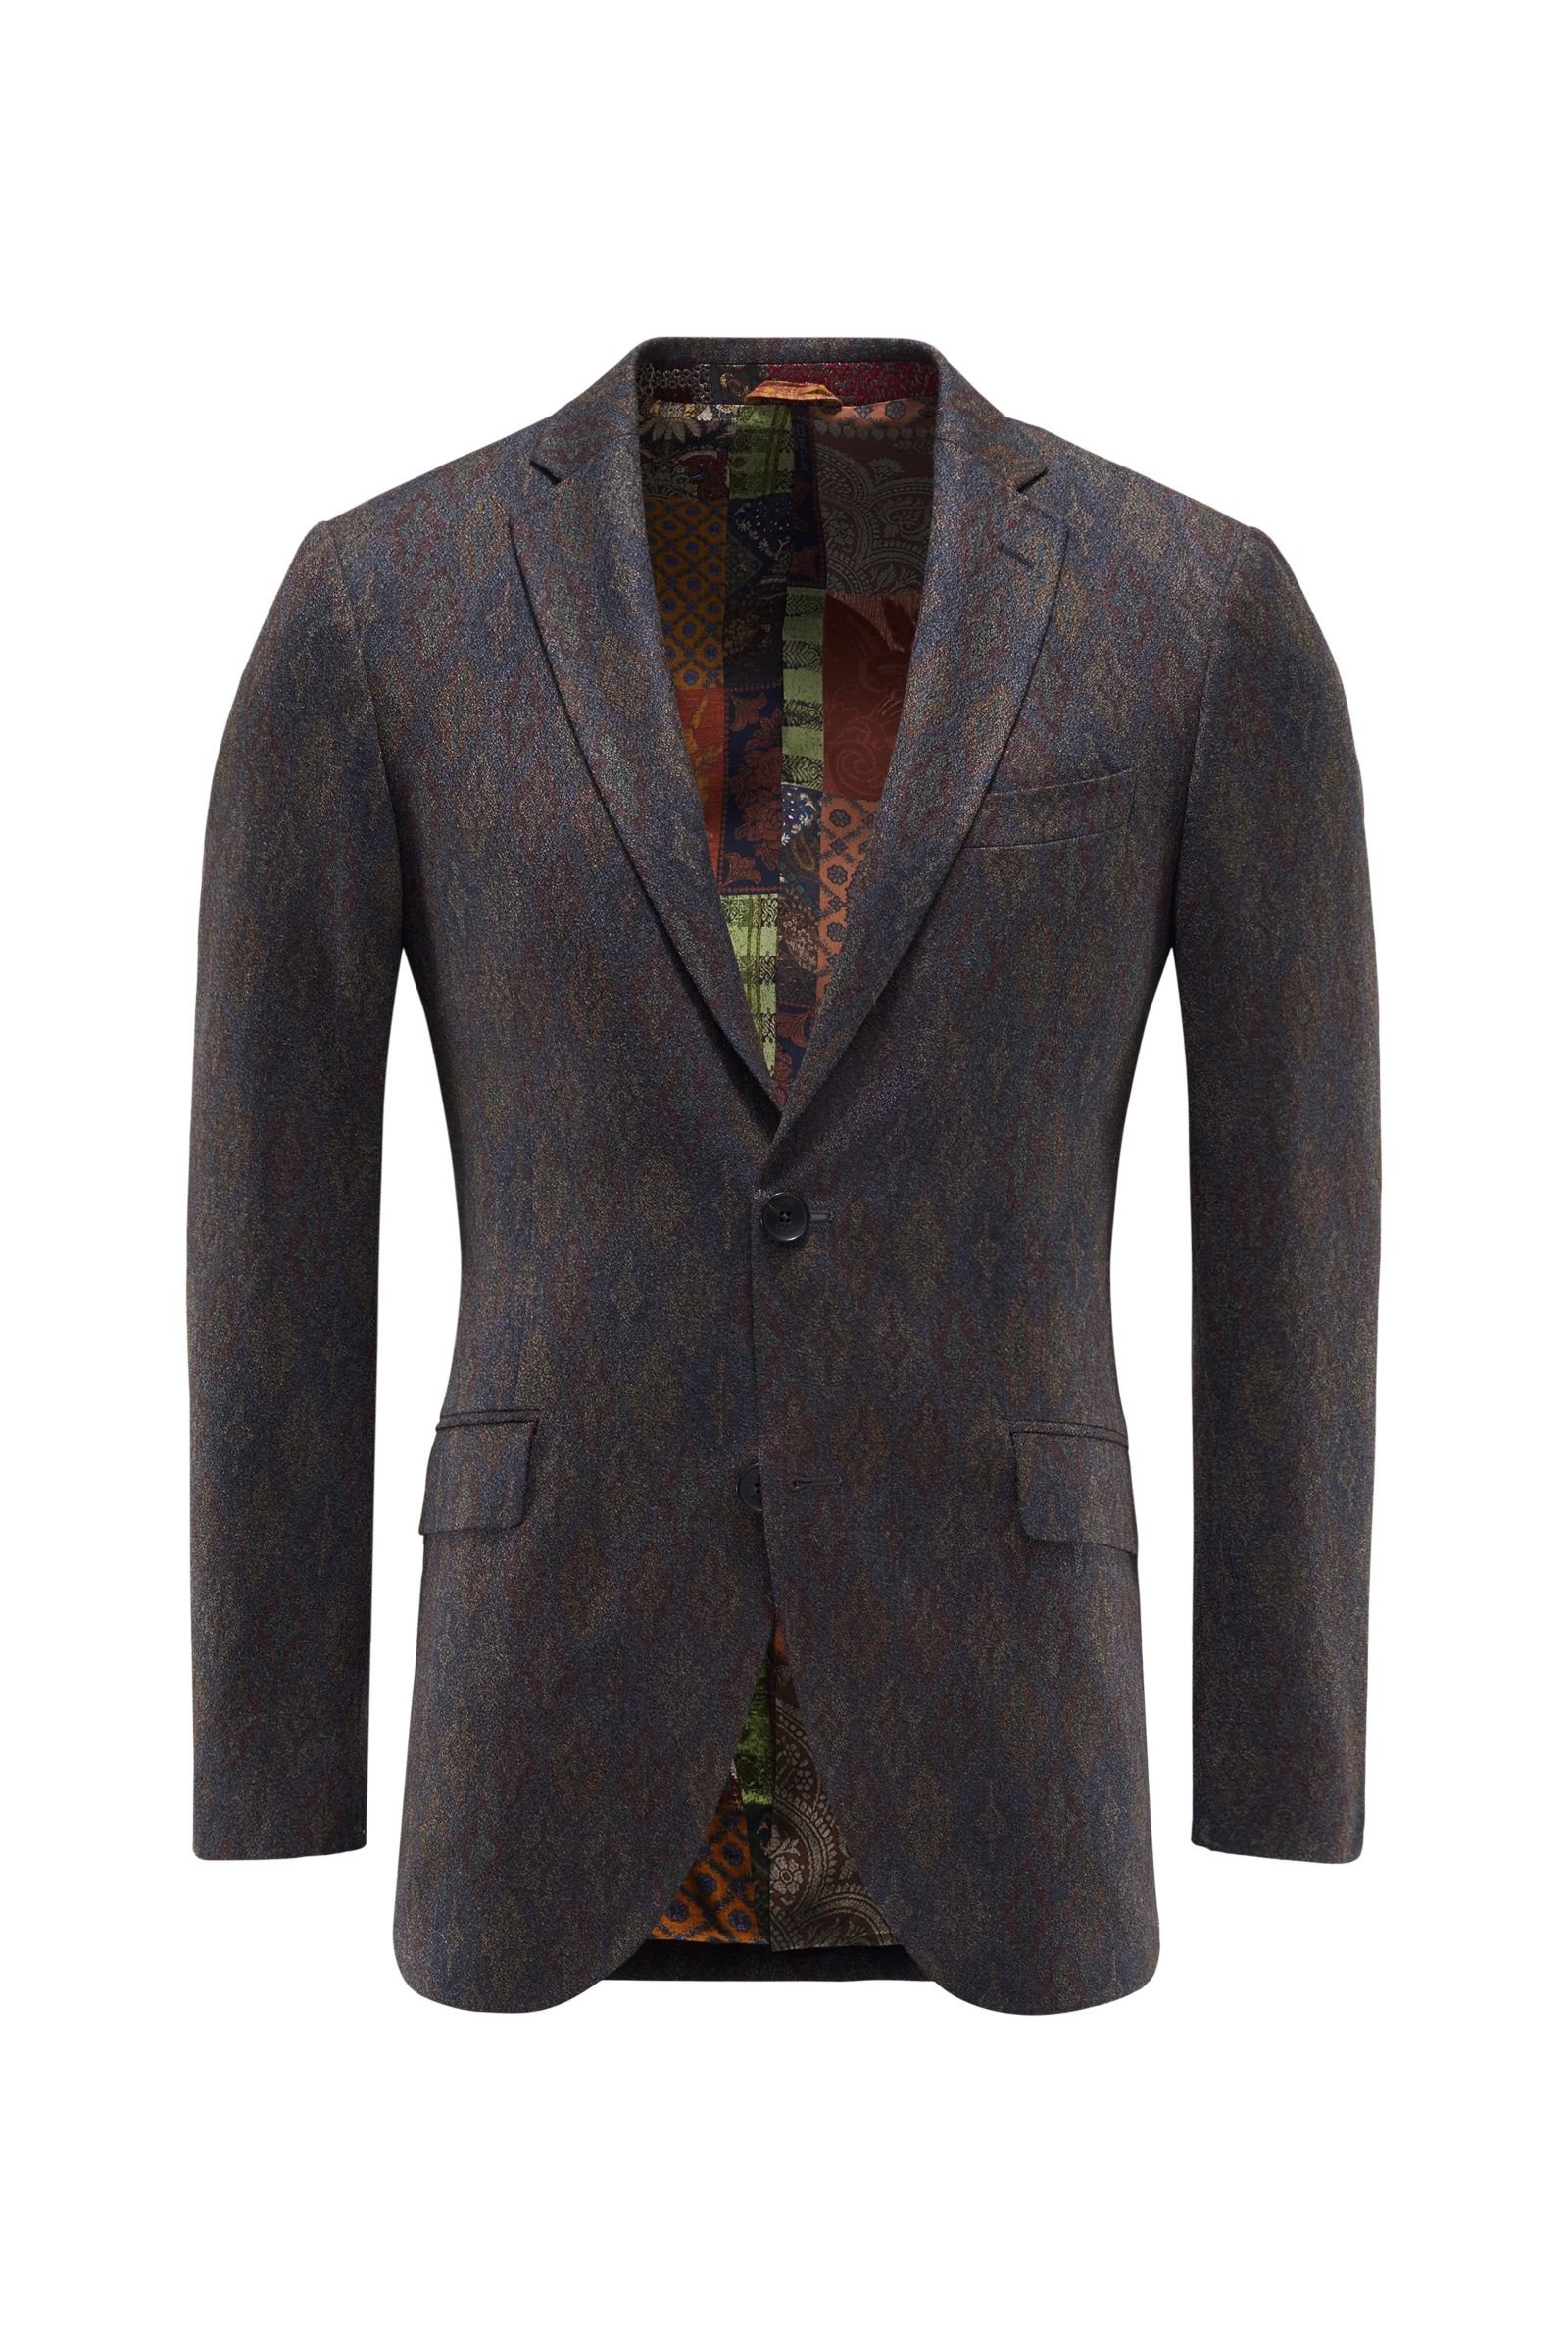 Smart-casual jacket blue-grey patterned